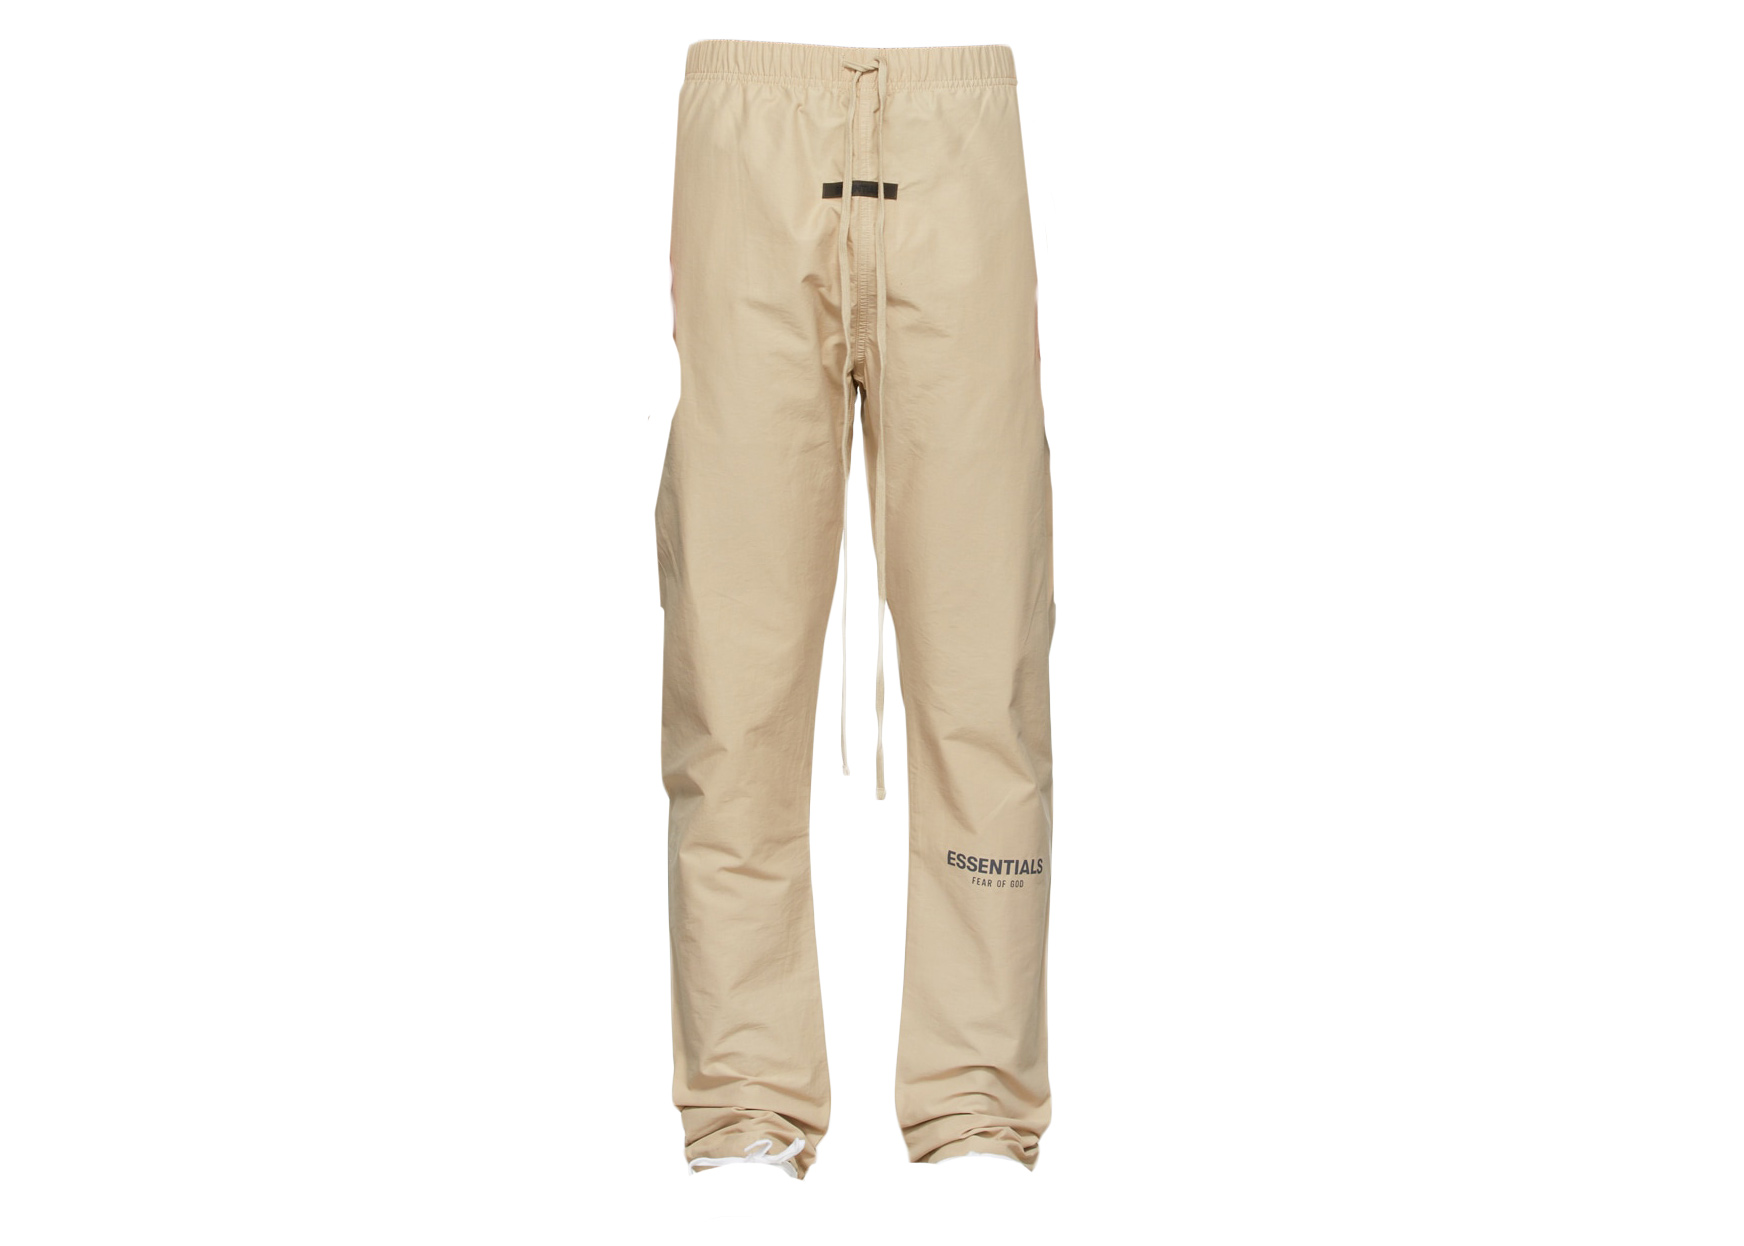 Madewell Linen Track Pants for Women | Mercari